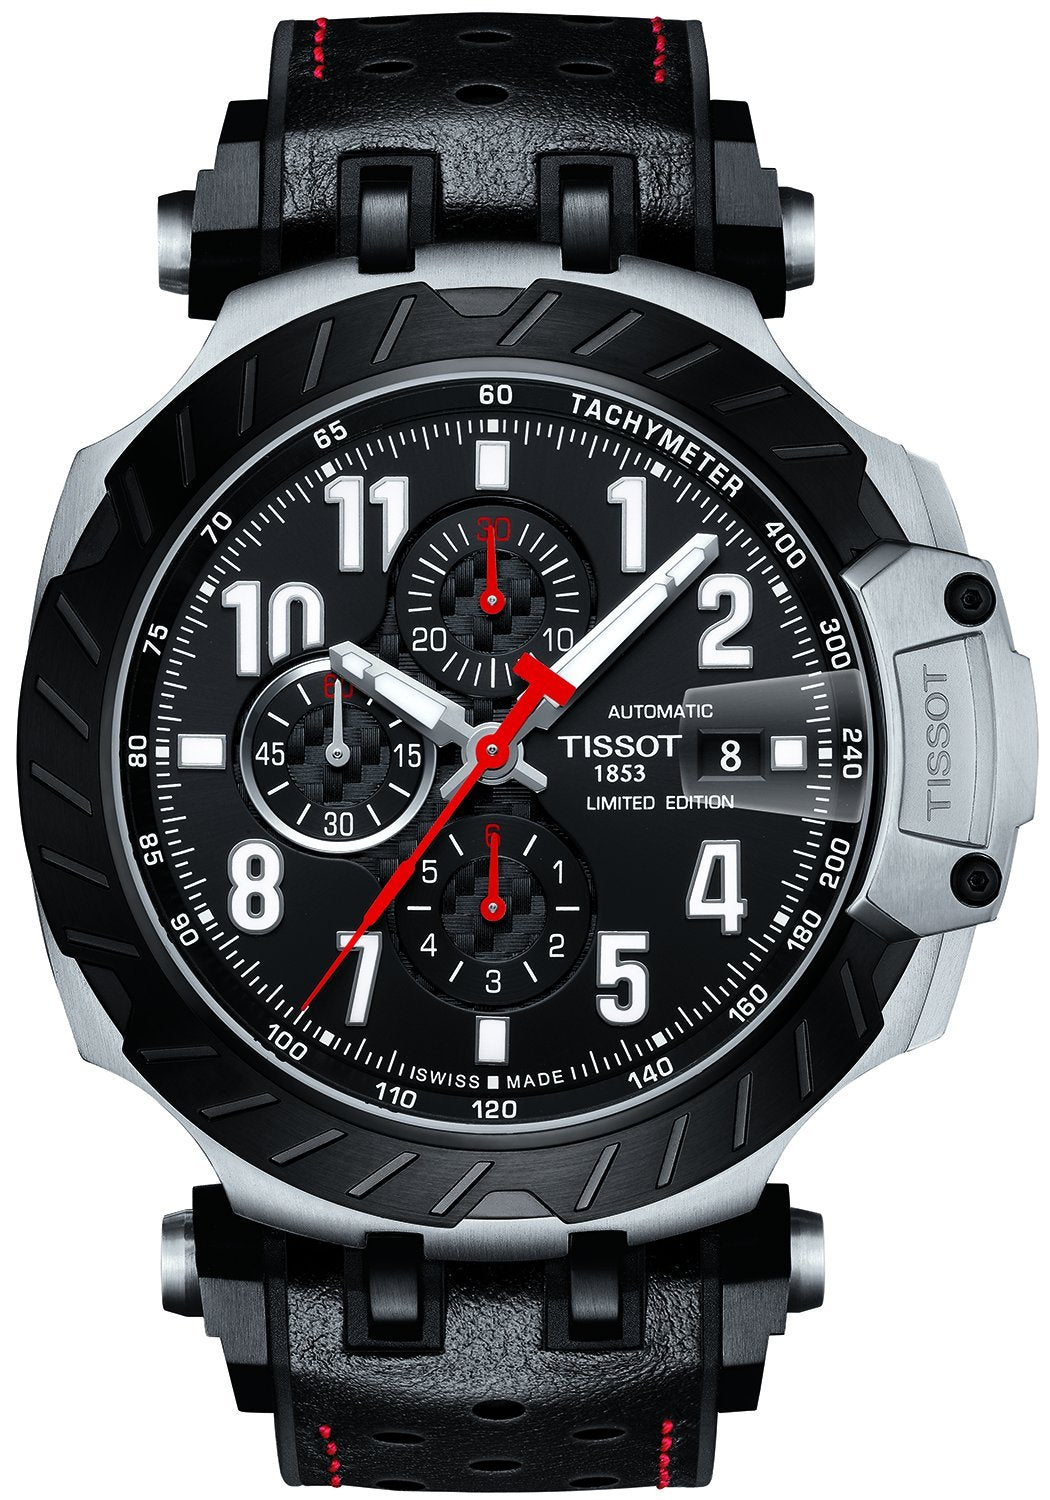 Tissot Watch T-race Motogp Automatic 2020 Limited Edition